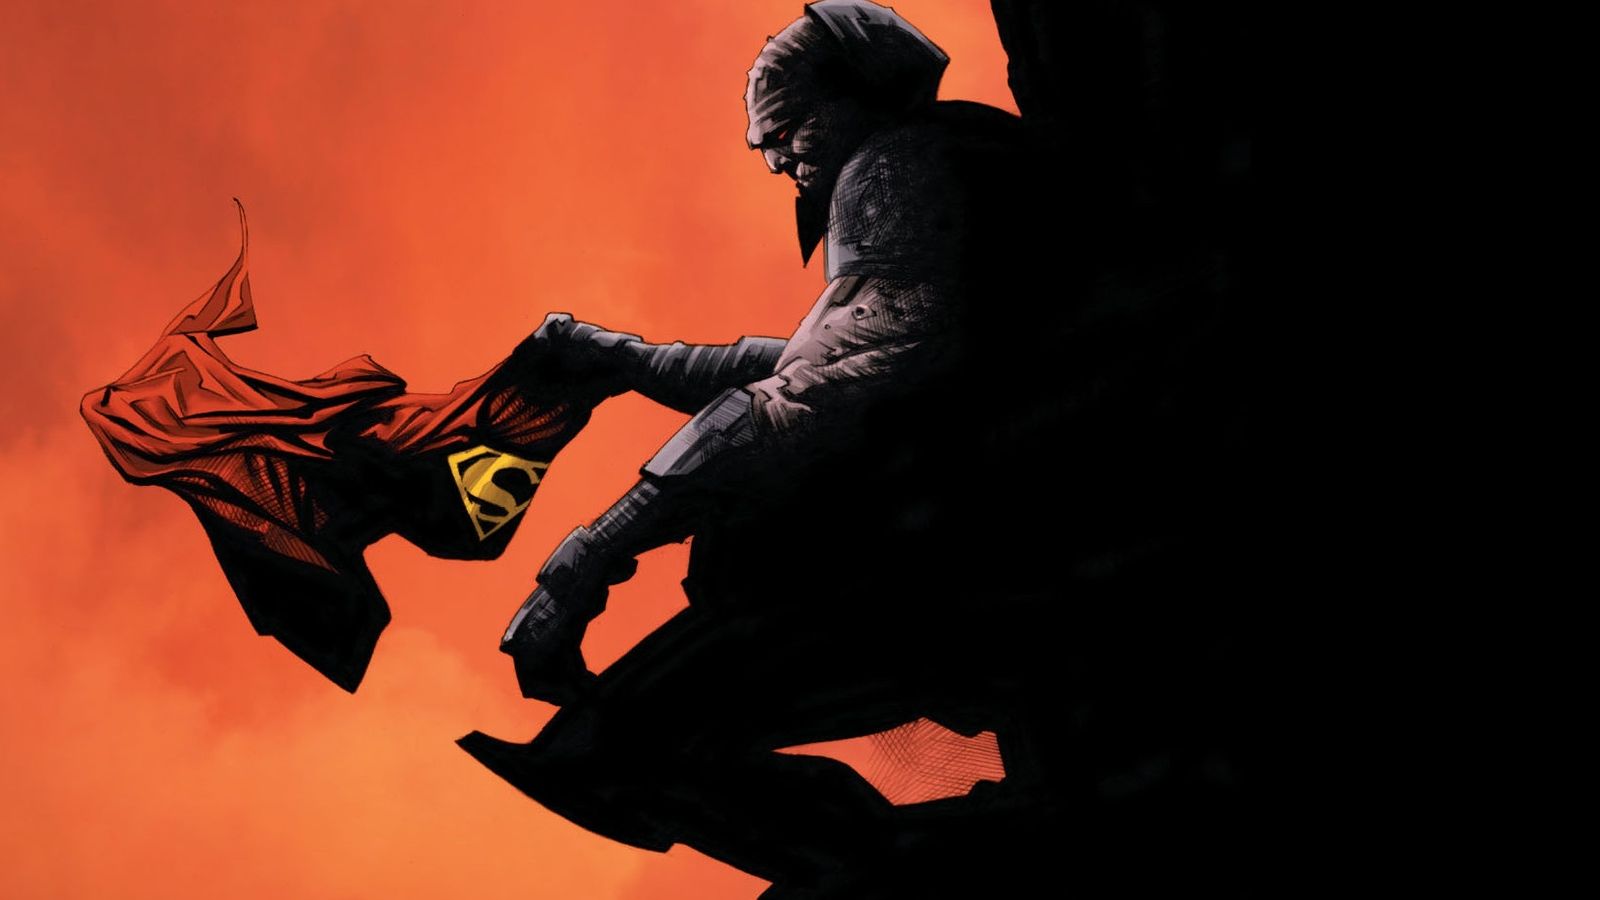 SUPERMAN VS BATMAN WALLPAPER josh012 – wallpaperjosh